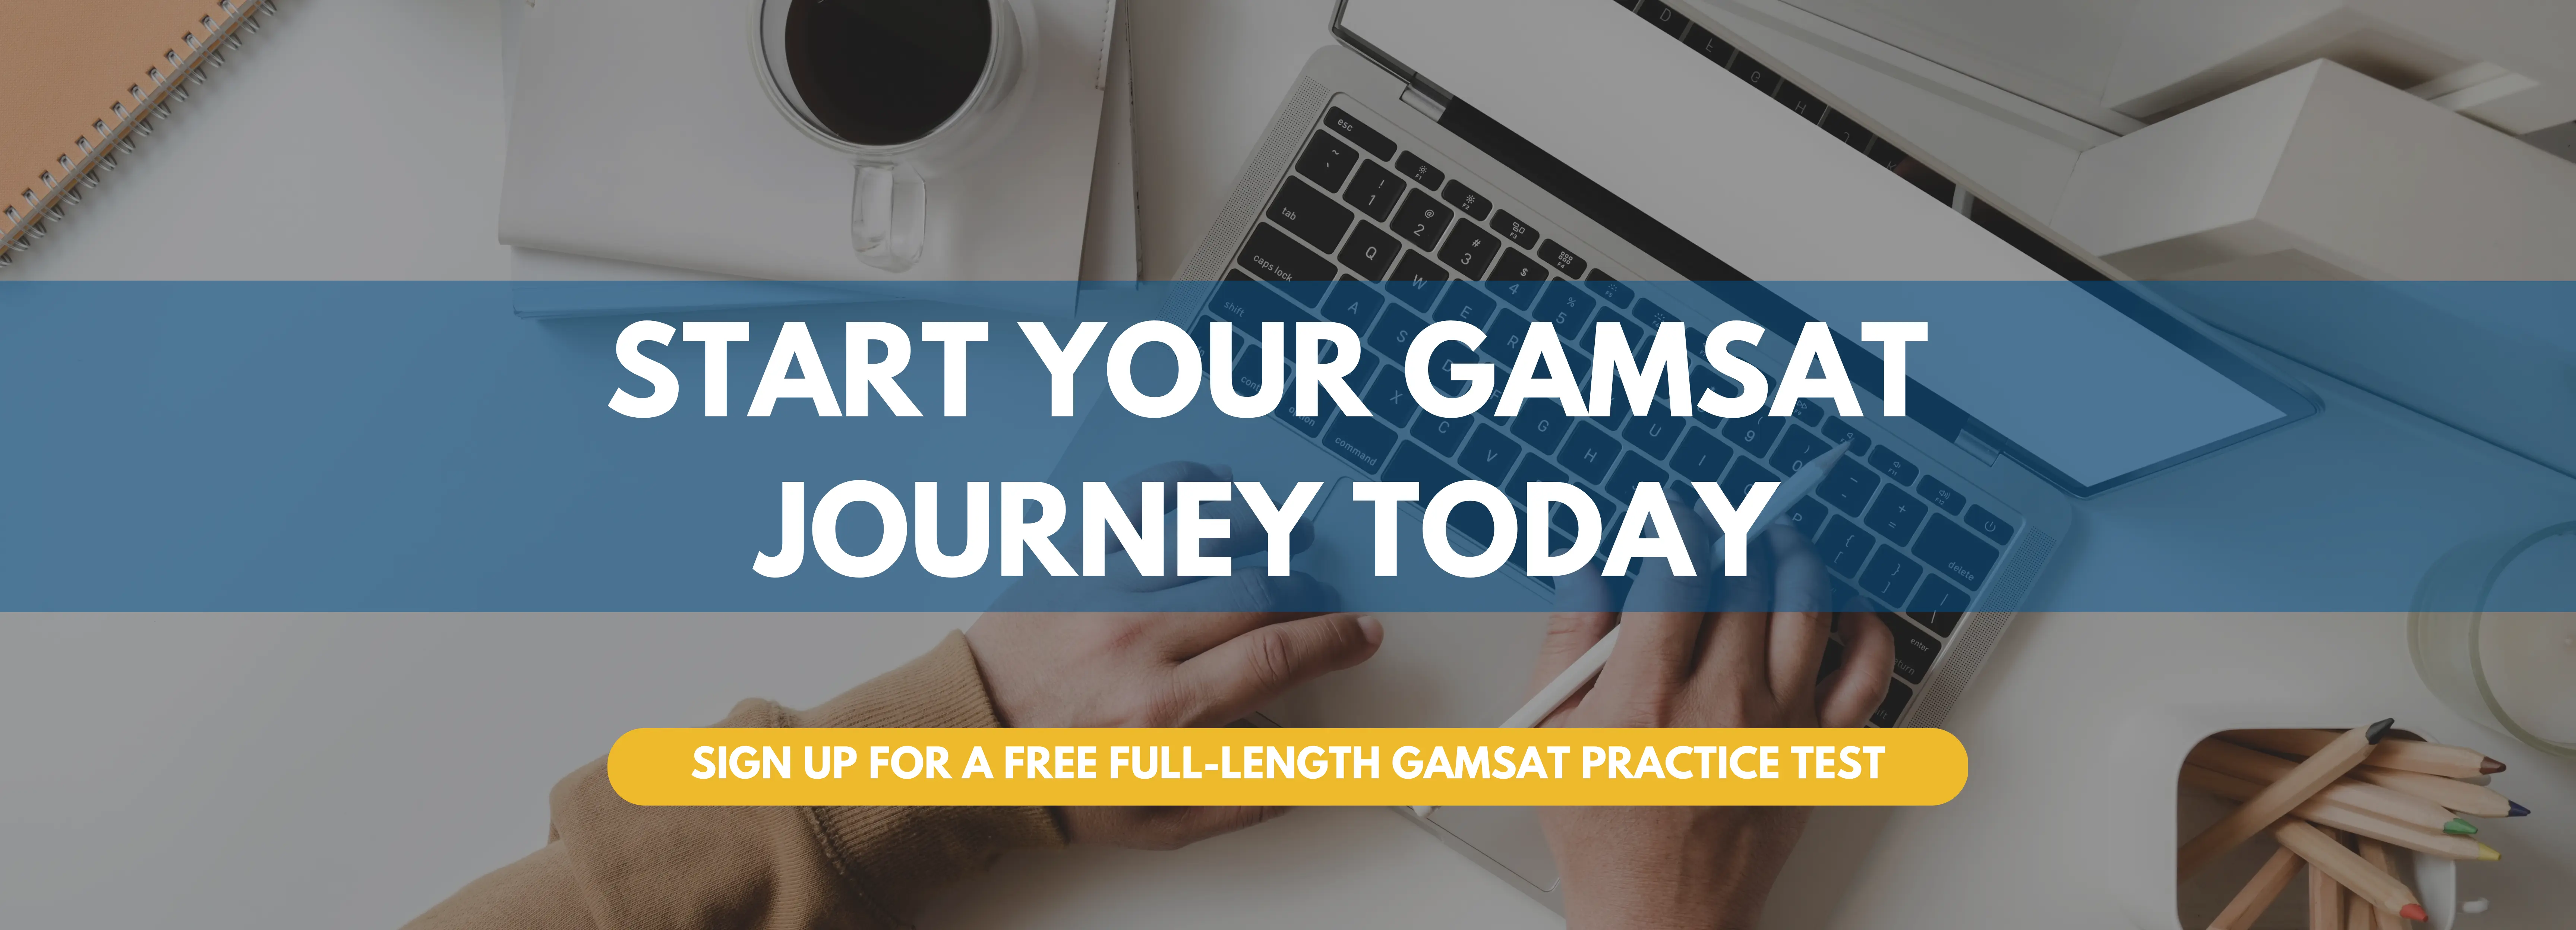 Start your GAMSAT Journey today.